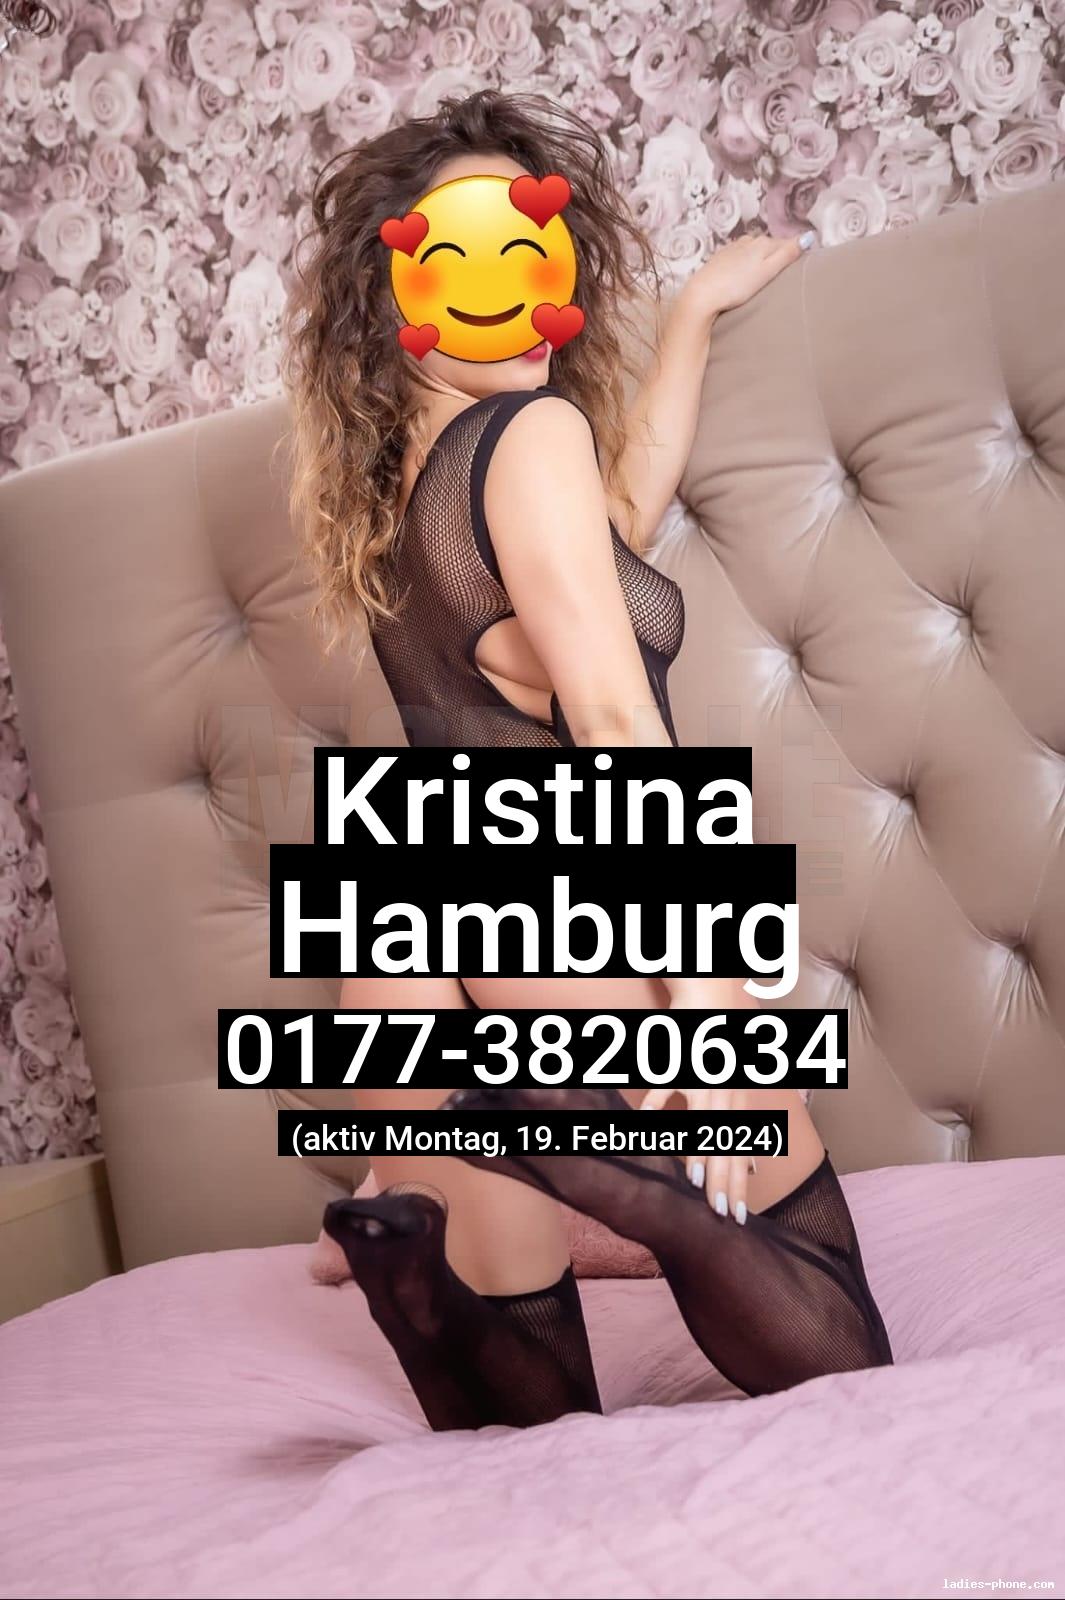 Kristina aus Hamburg